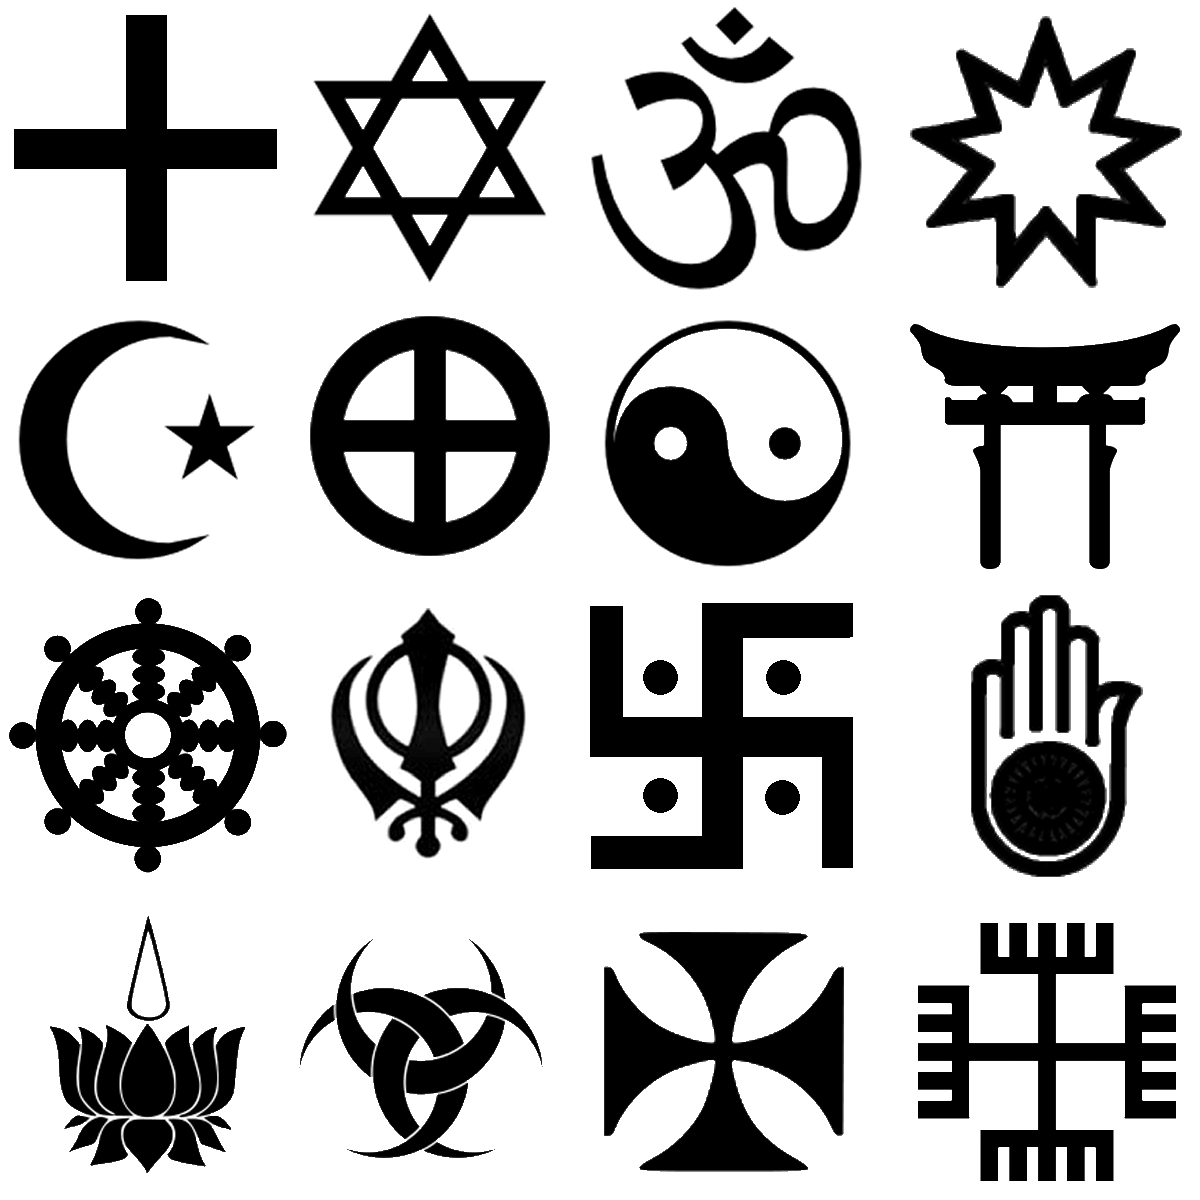 Menorah religion symbols jewd